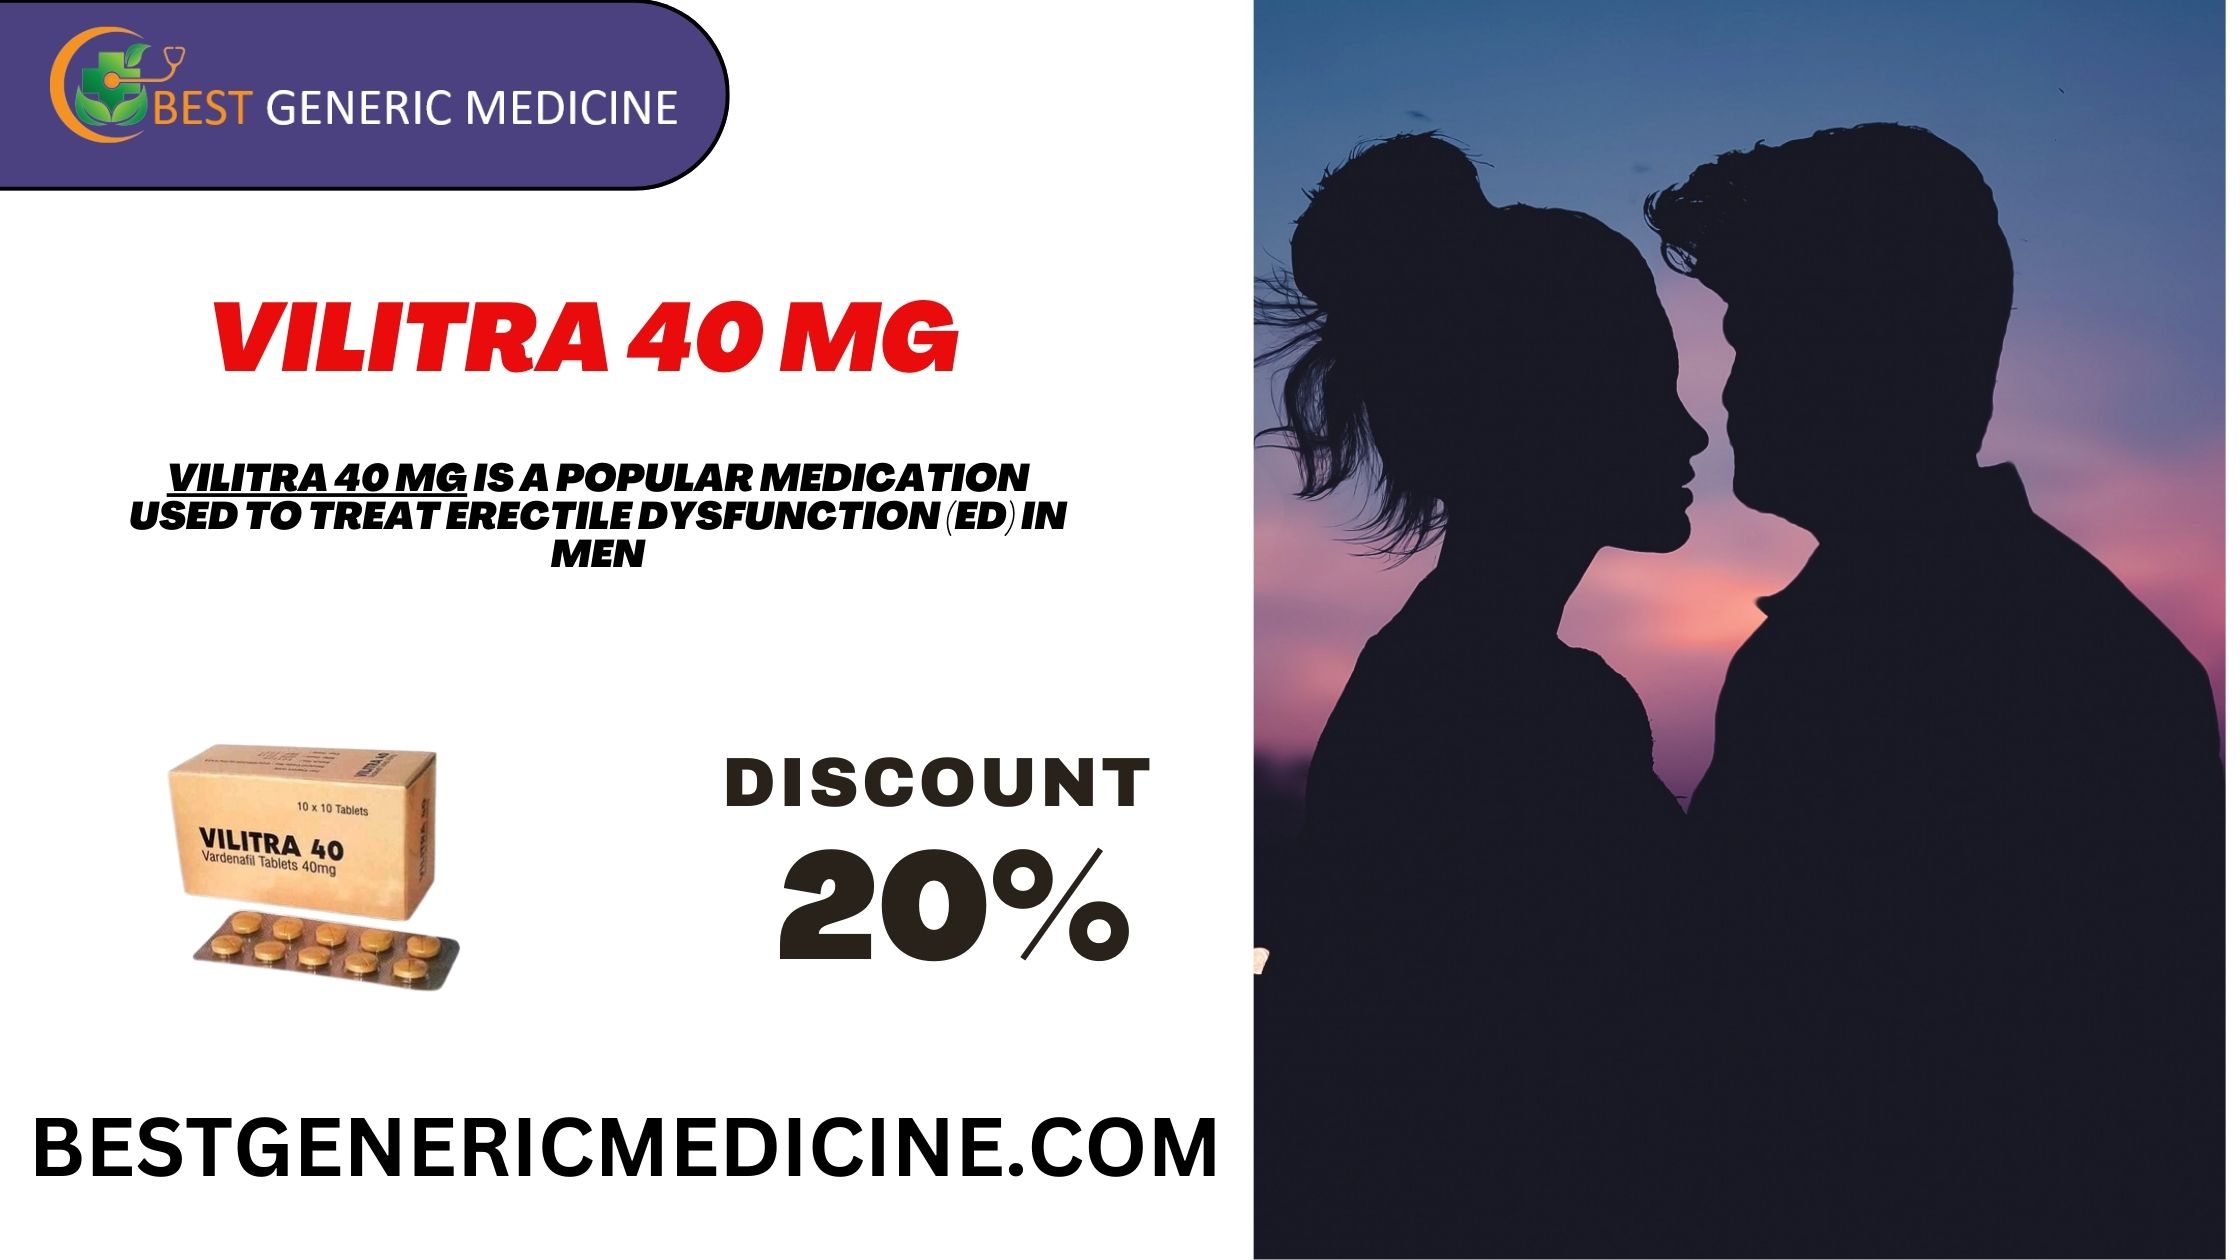 € BEST GENERIC MEDICINE

   
   
      
 

VILITRA 40 MG

IS APOPULAR MEDICATION
USED To TREAT ERECTILE DYSFUNCTION ED)IN
ME|

VILITRA 40

mous 20°

BESTGENERICMEDICINE.COM